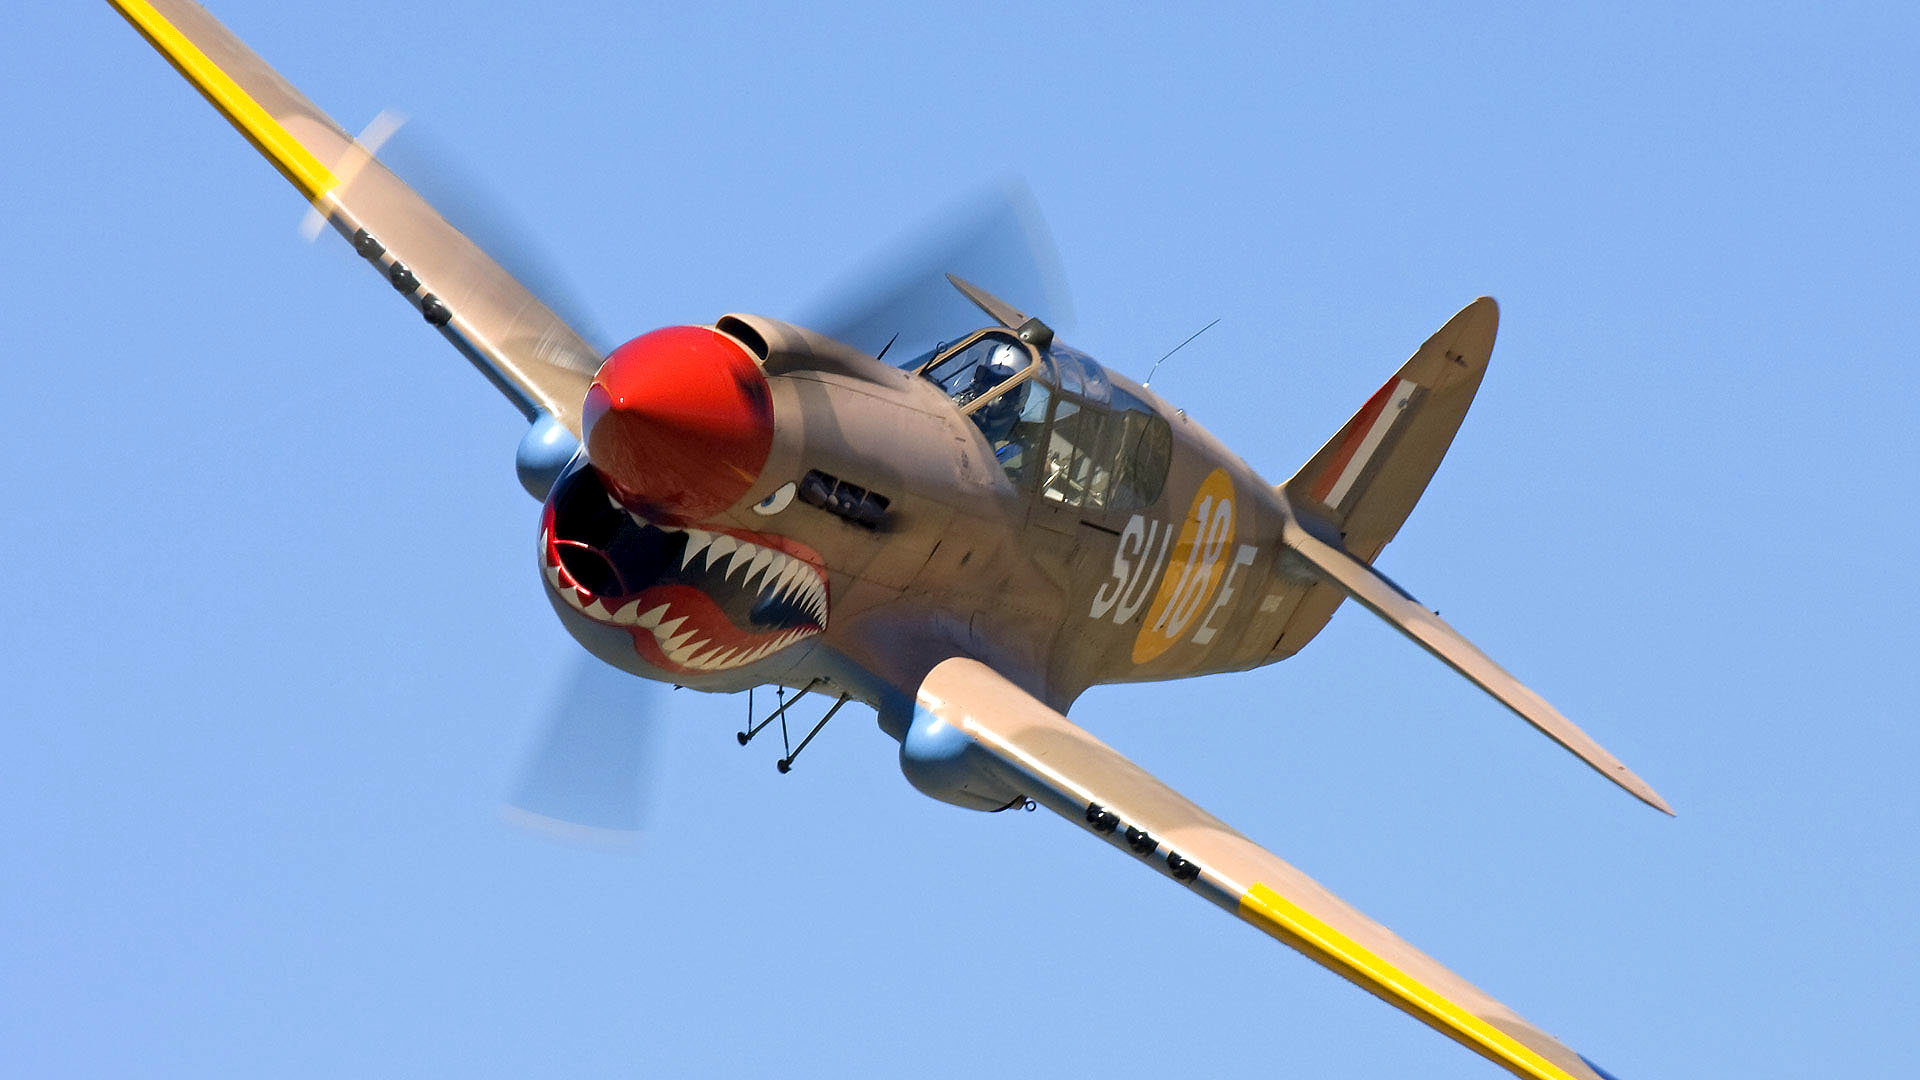 Download hd 1920x1080 Curtiss P-40 Warhawk desktop background ID:432066 for free